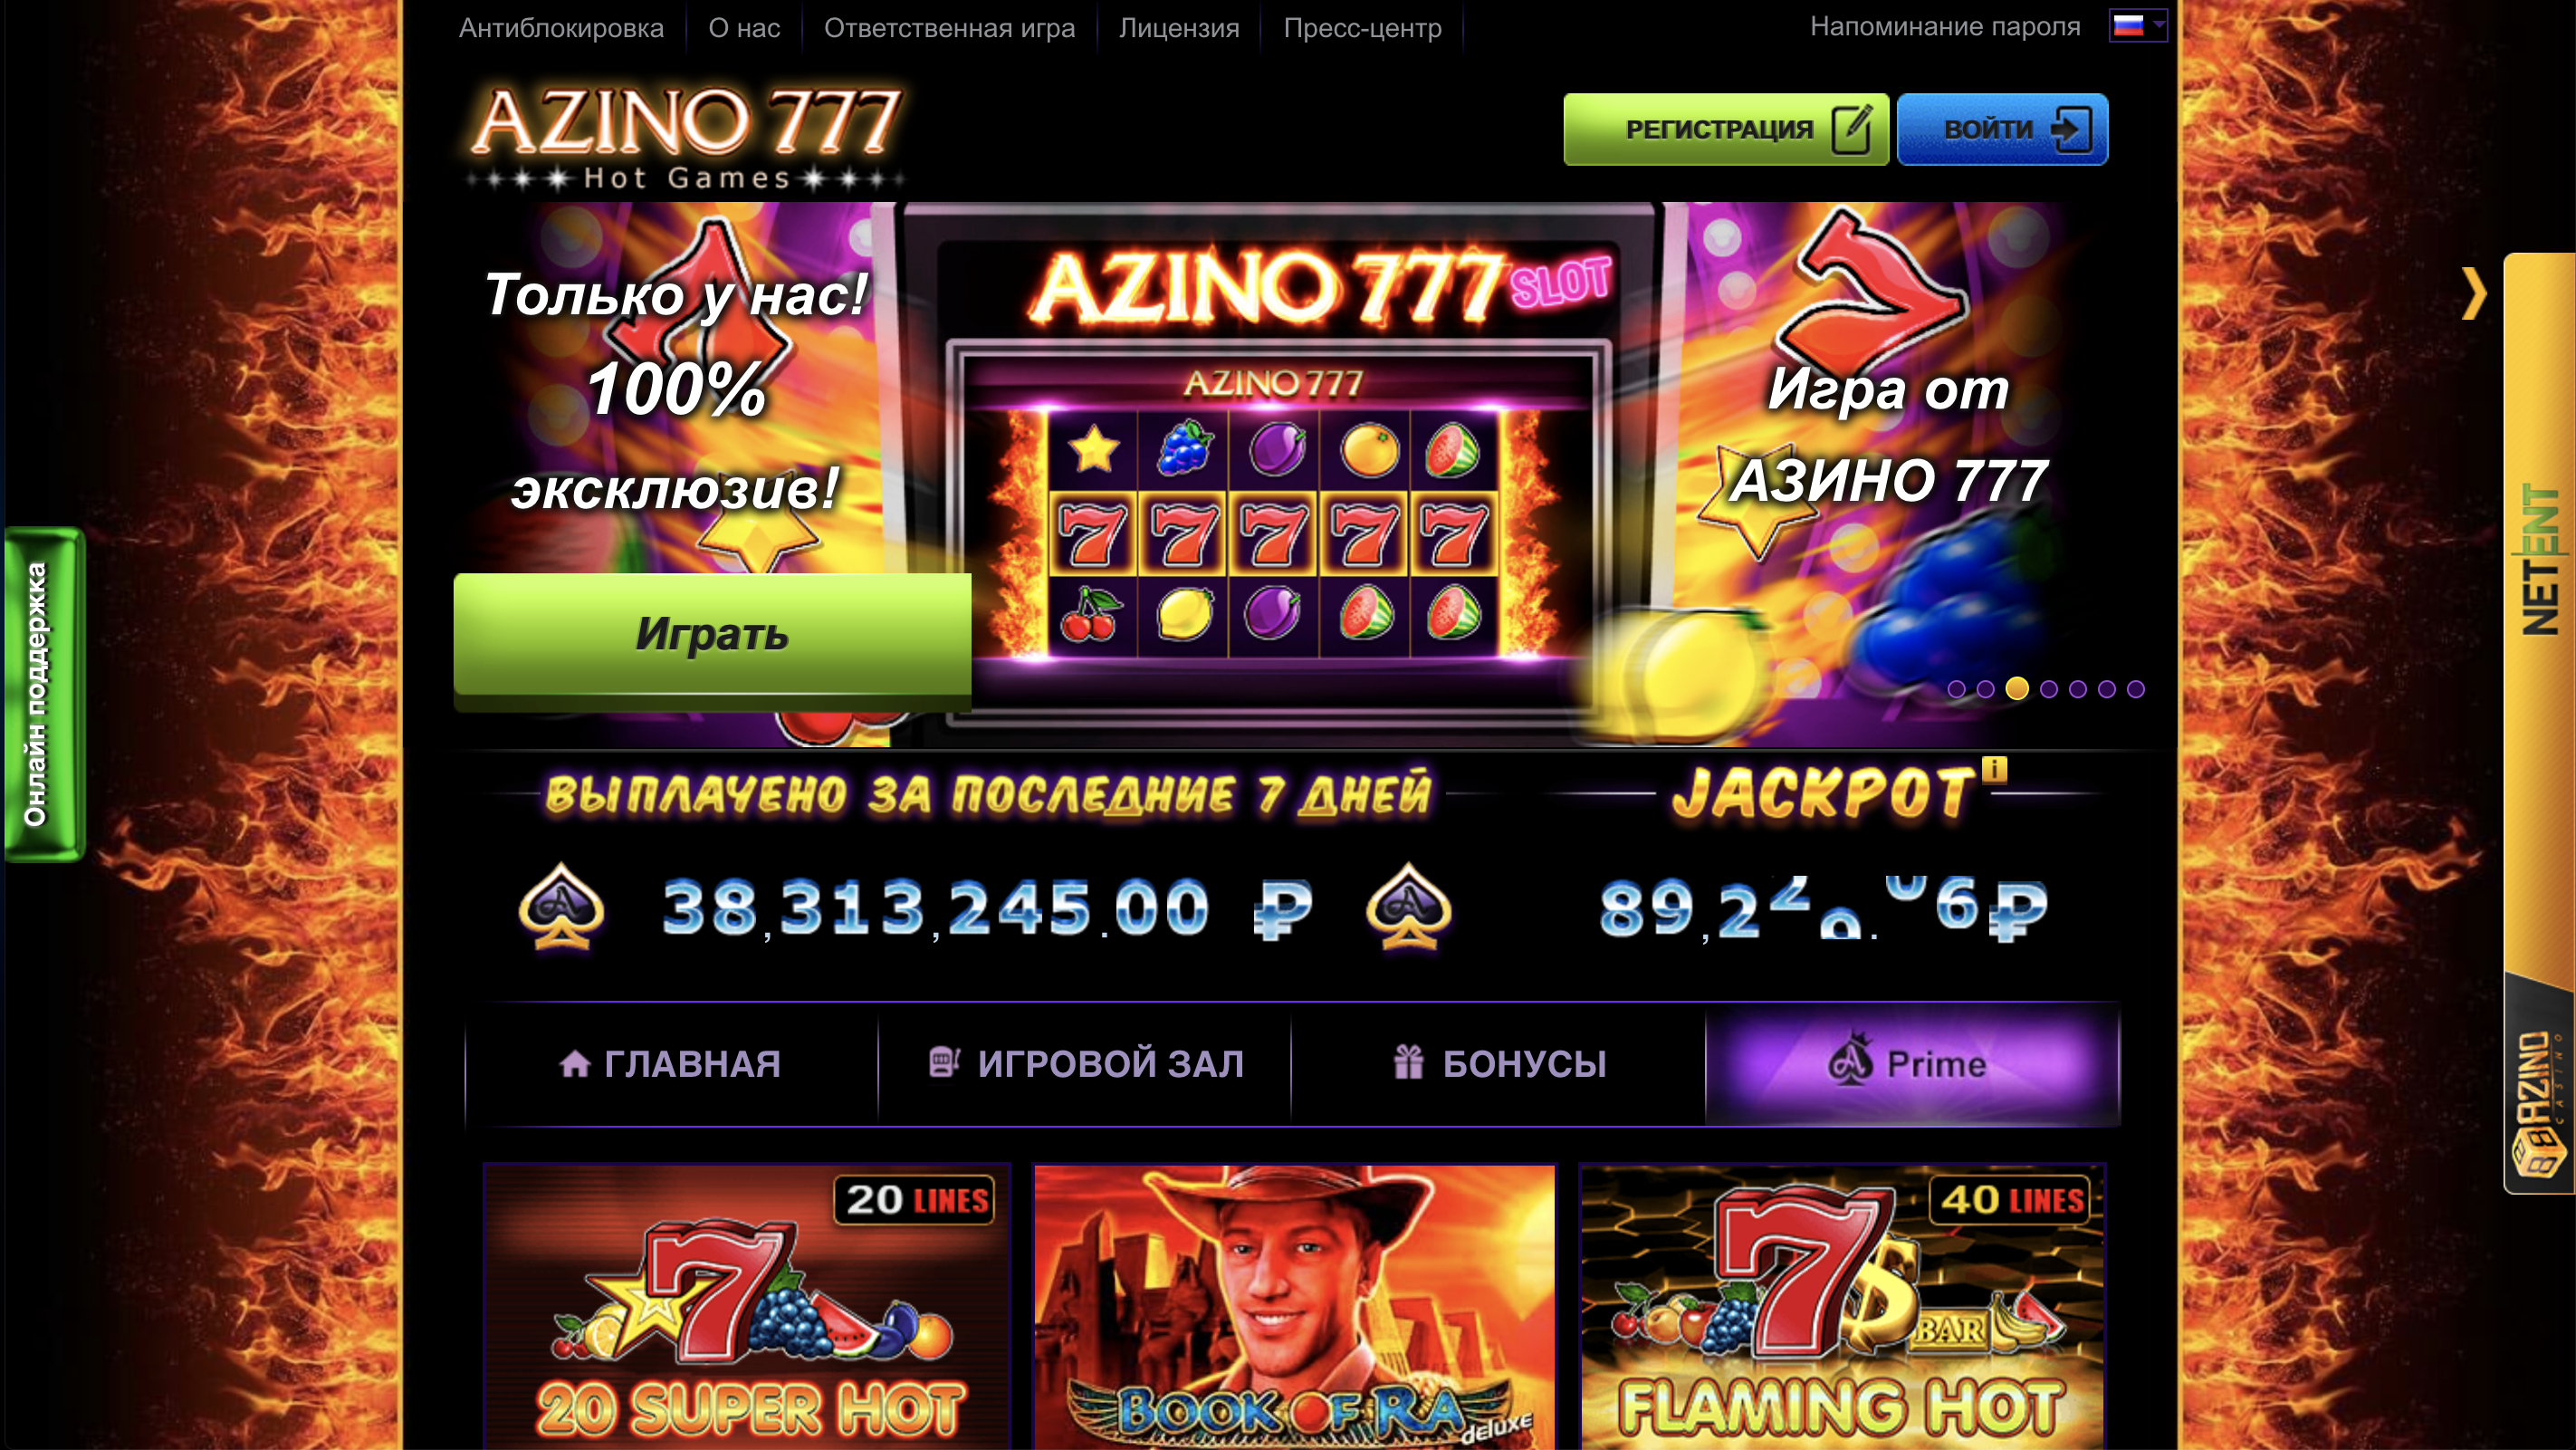 Azino777 официальный сайт azino777 jq xyz бонус код для play fortuna casino